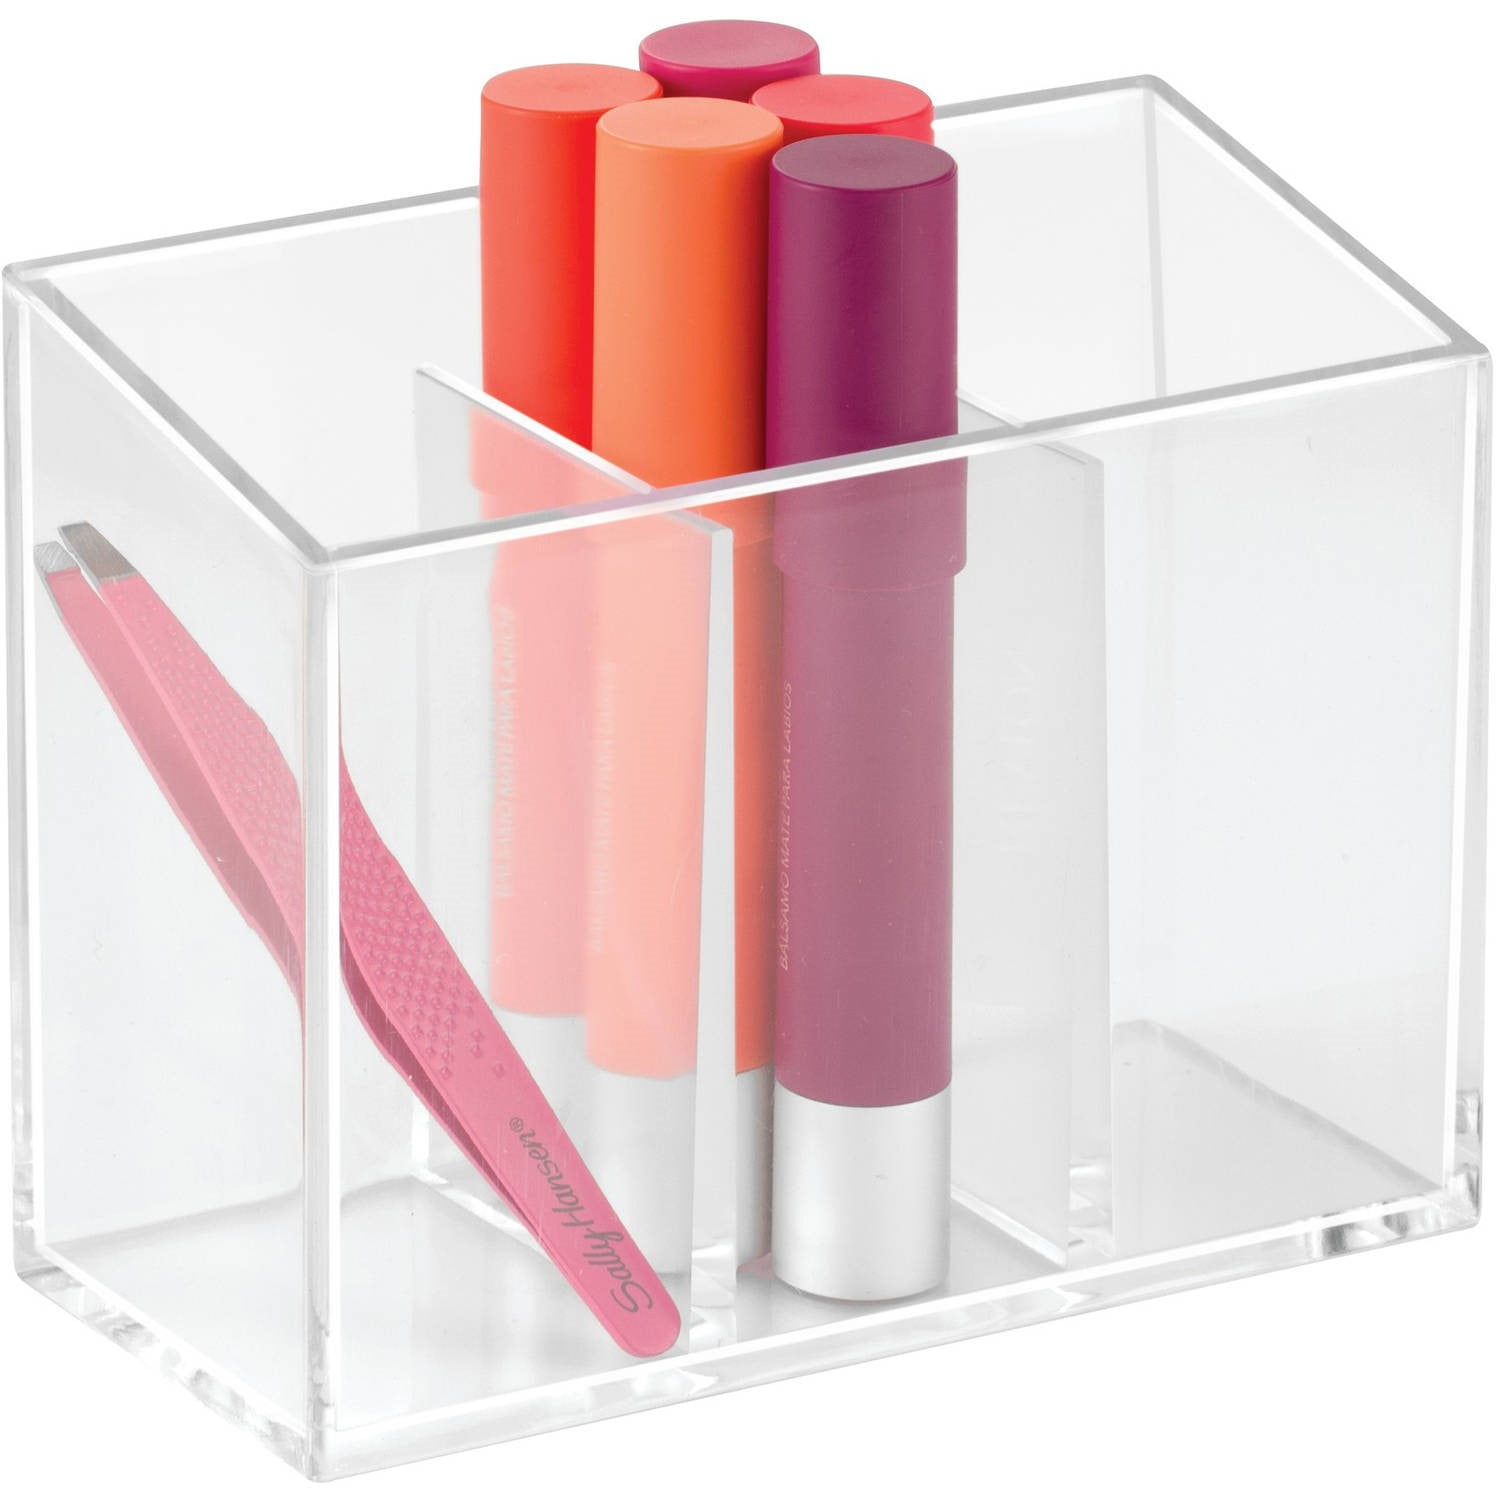 Mainstays 3 Compartment Clear Plastic Makeup Brush Storage Organizer